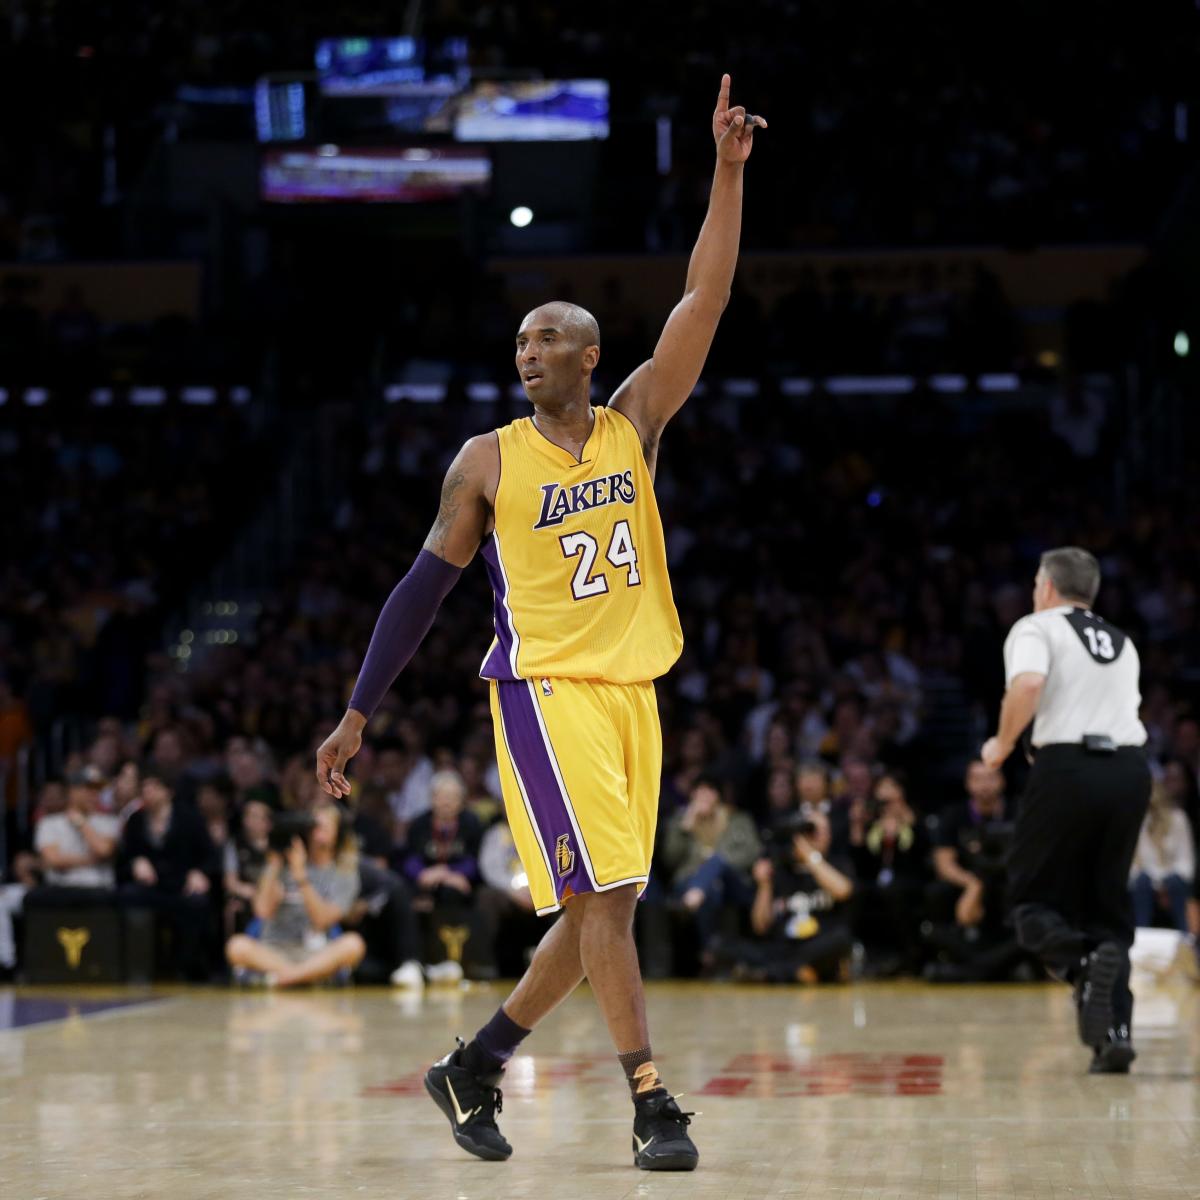 No. 8 Or No. 24? 'Mamba' Jersey Sports Both Kobe Bryant Numbers - CBS Los  Angeles